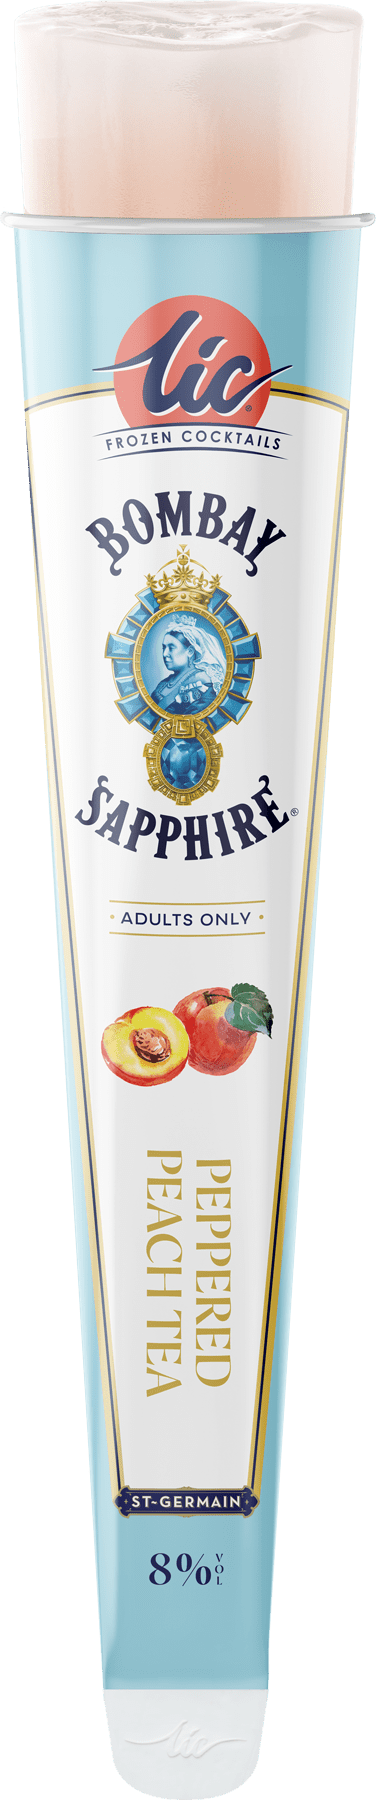 Peppered Peach: Bombay Sapphire